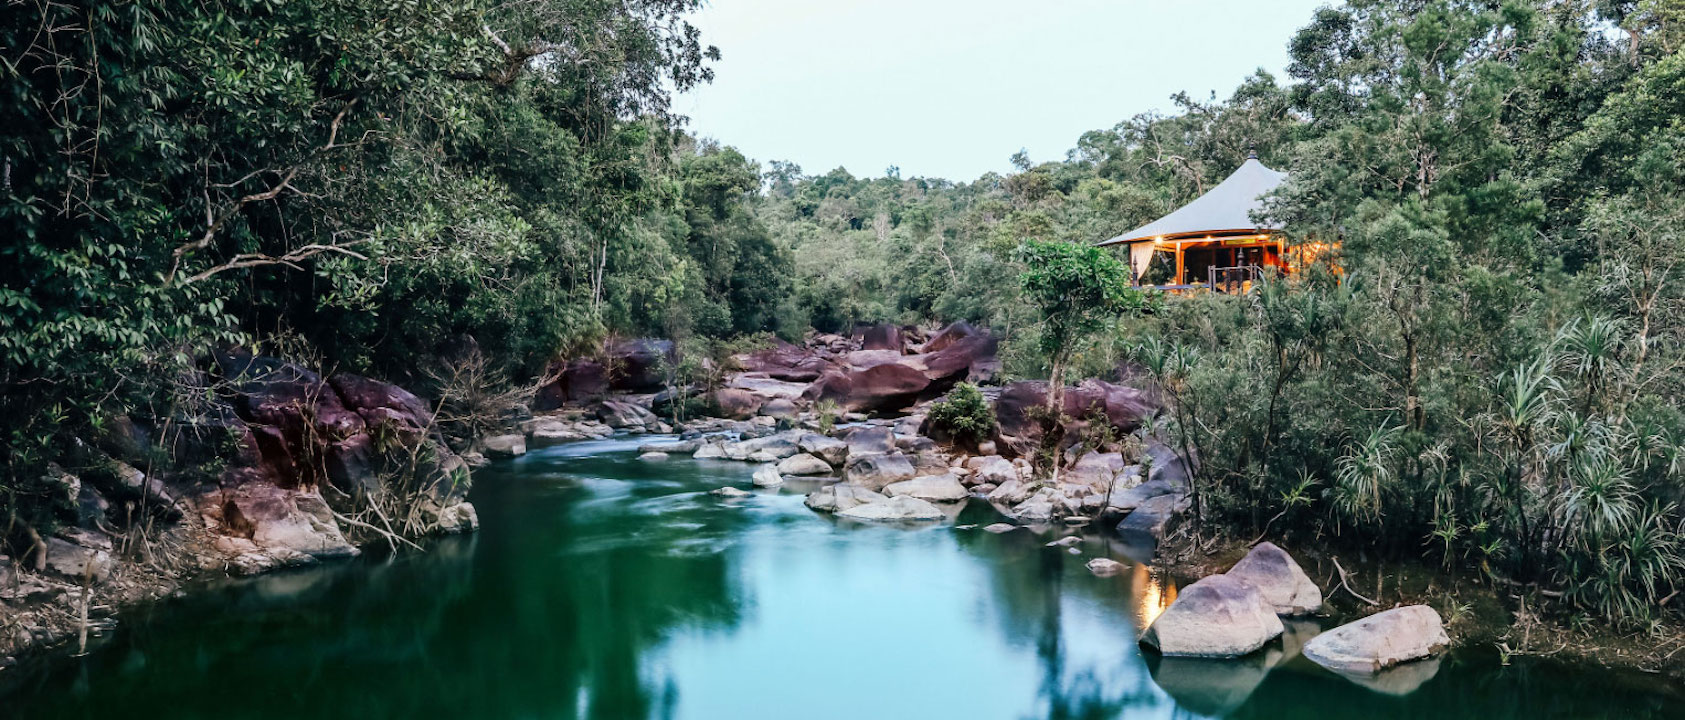 Shinta Mani Wild , Camp style Luxury top resort in Nature , Bokor National Park / Cambodia 